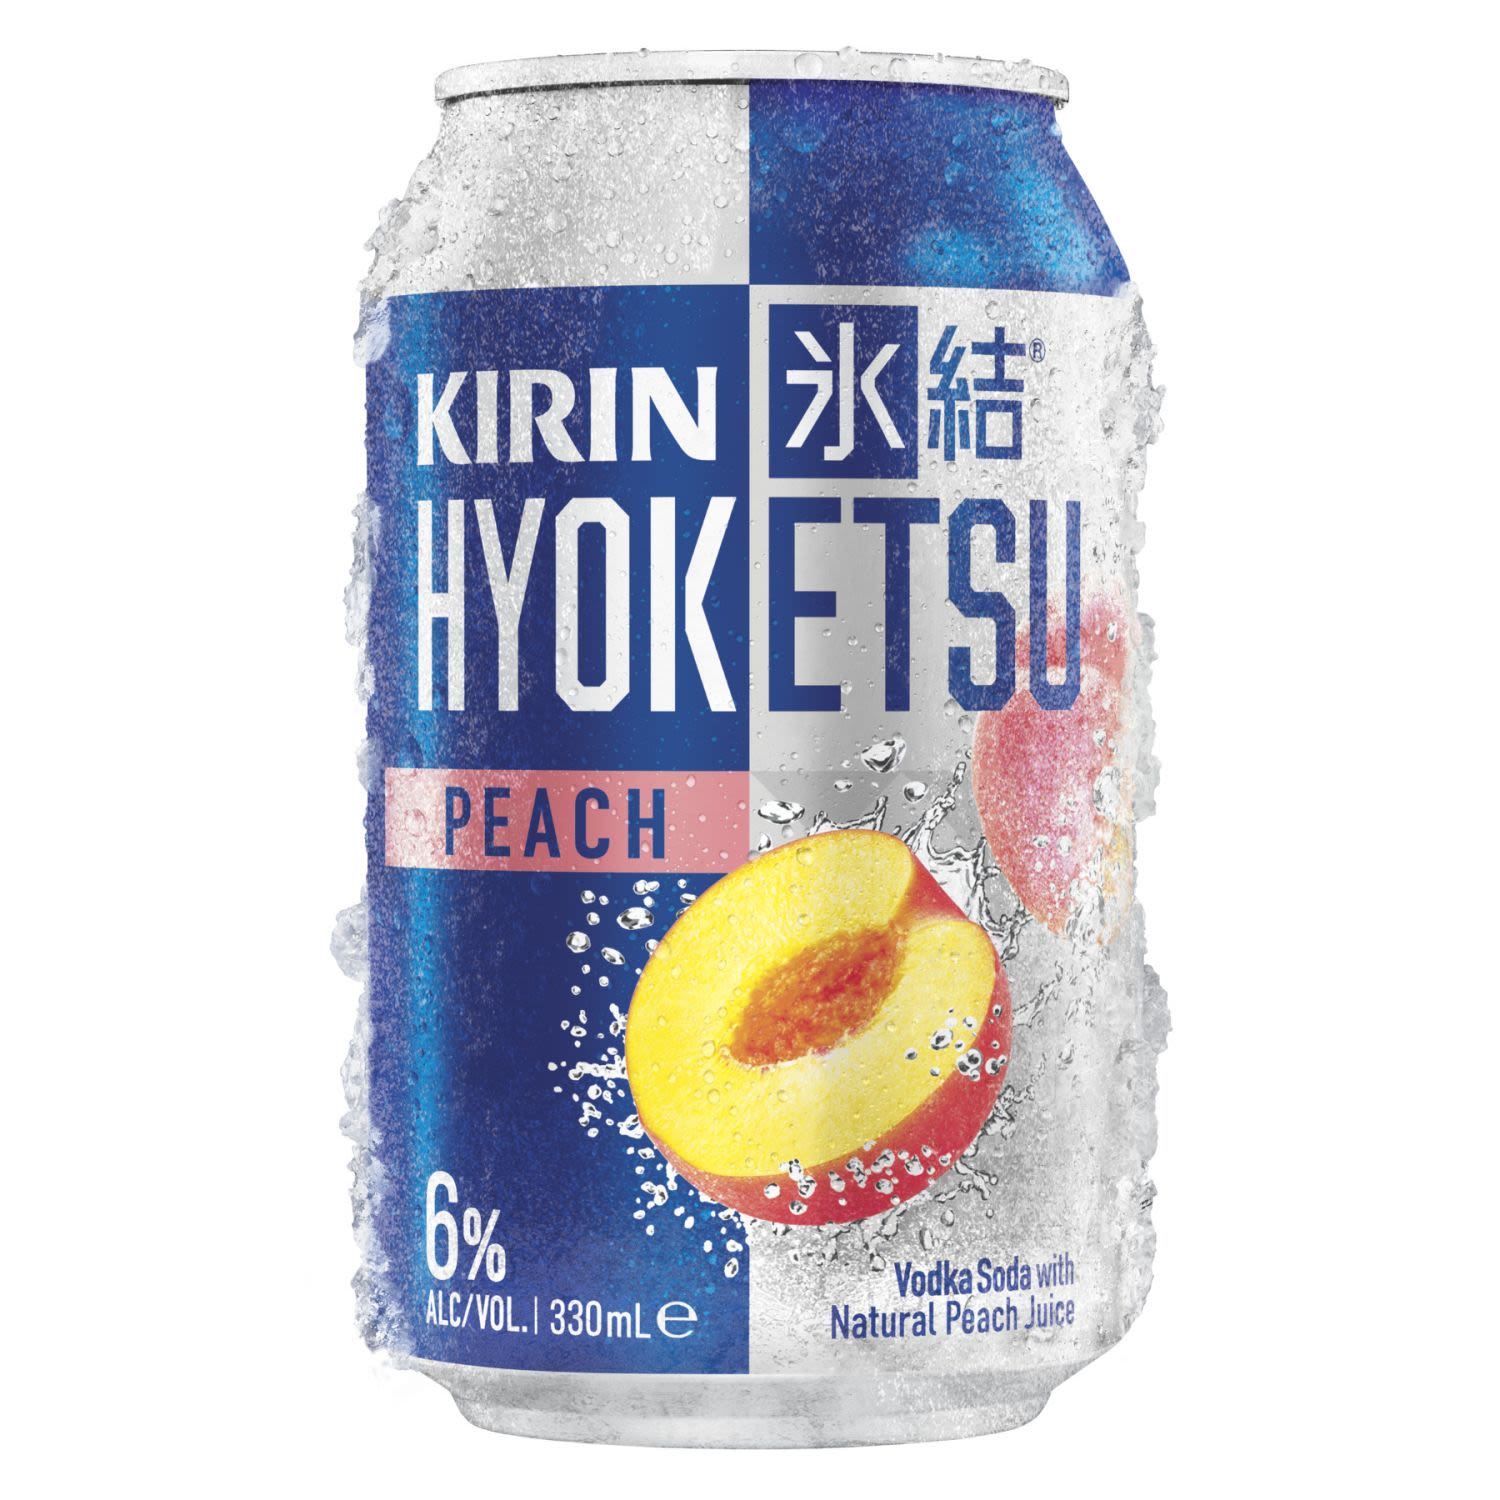 Kirin Hyoketsu Peach 330mL Can